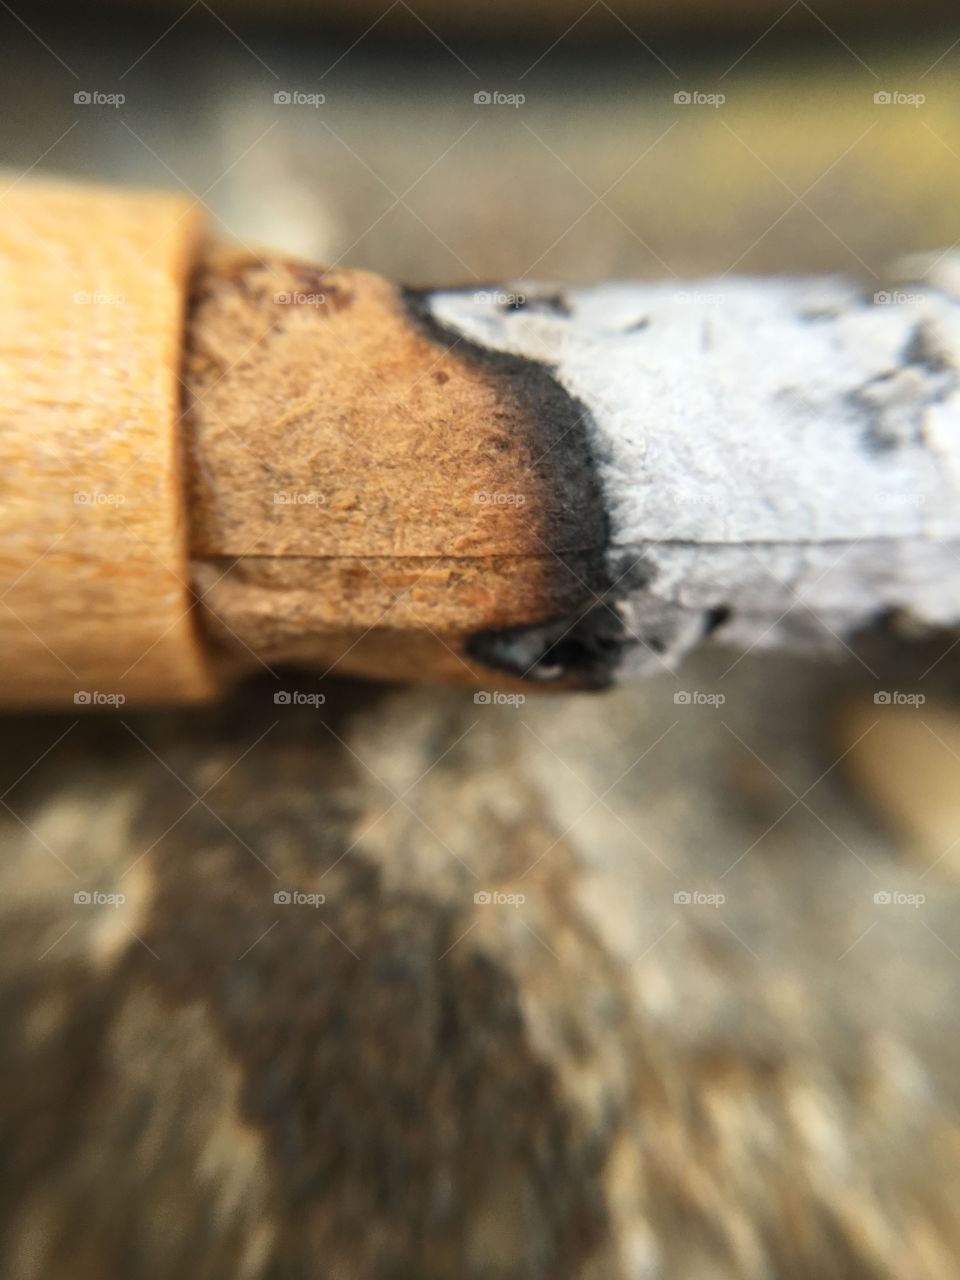 Wood tipped burning cigar. 